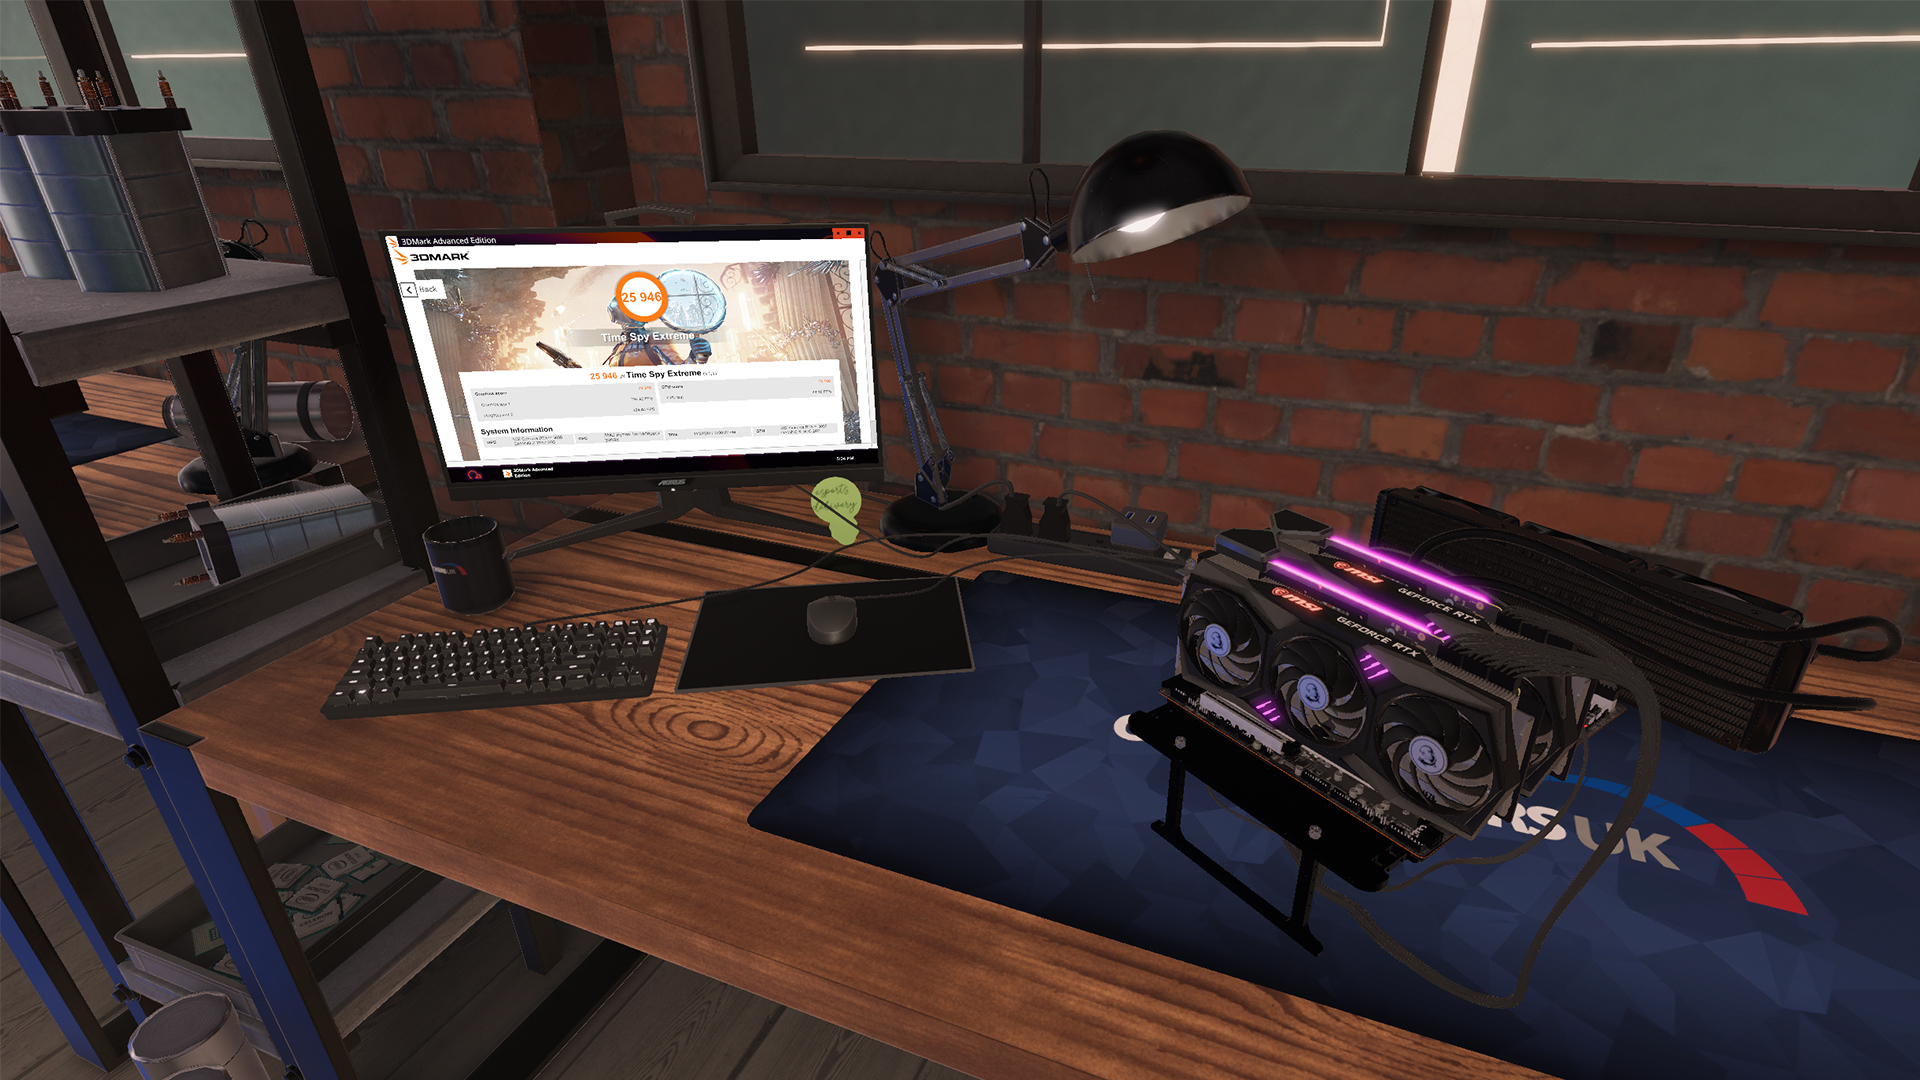 PC Building Simulator - PC Building Simulator Update v1.9.5 - Steam News